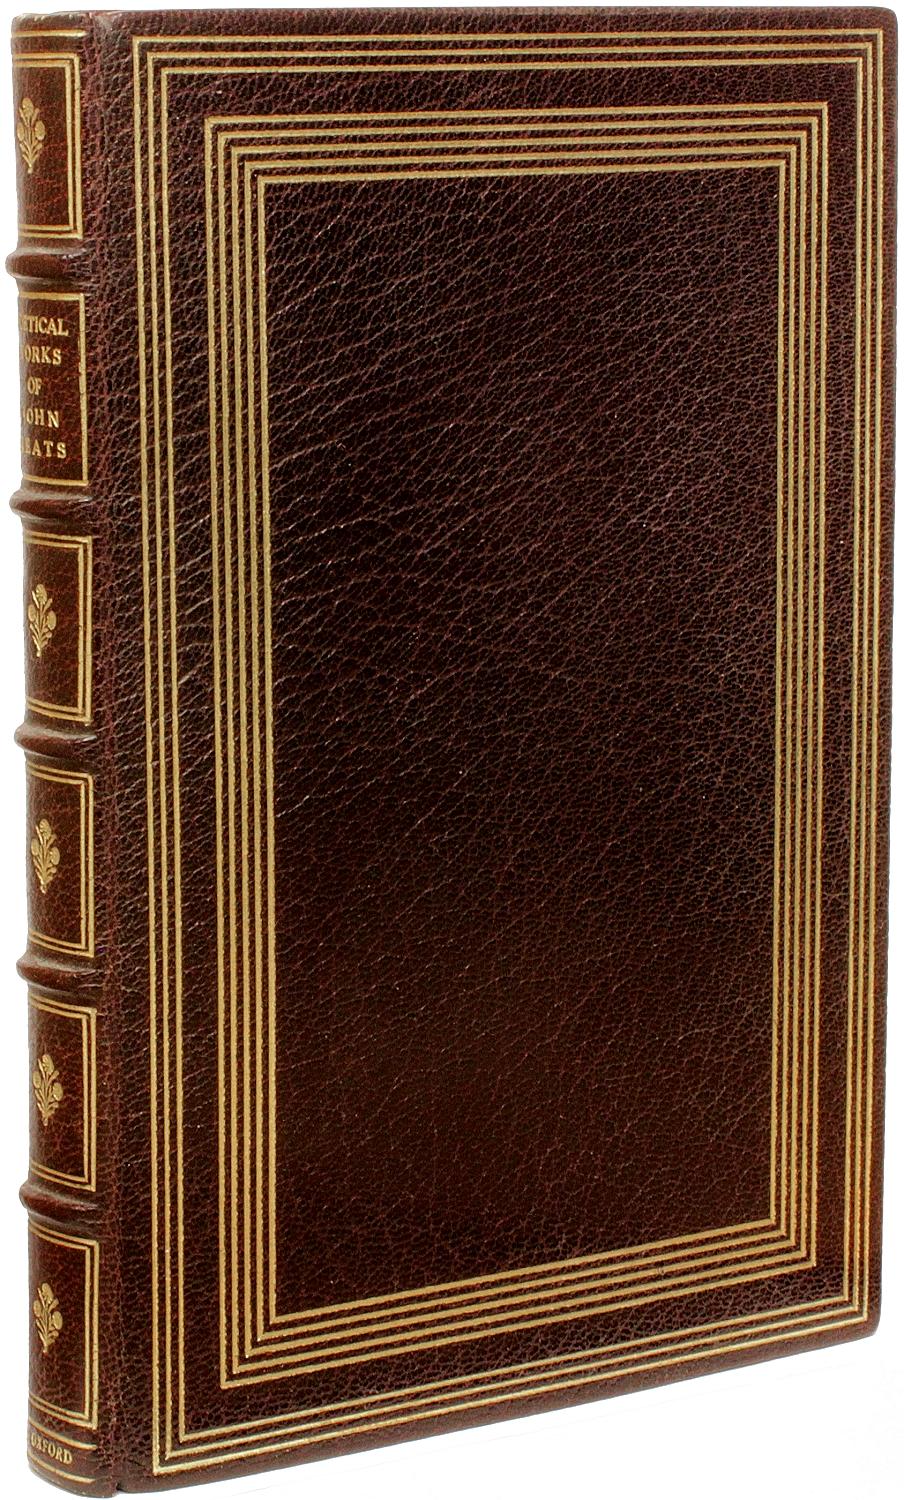 AUTHOR: KEATS, John

TITLE: The Complete Poetical Works of John Keats.

PUBLISHER: London: Oxford University Press, 1925.

DESCRIPTION: 1 vol., 491pp., 7-1/4